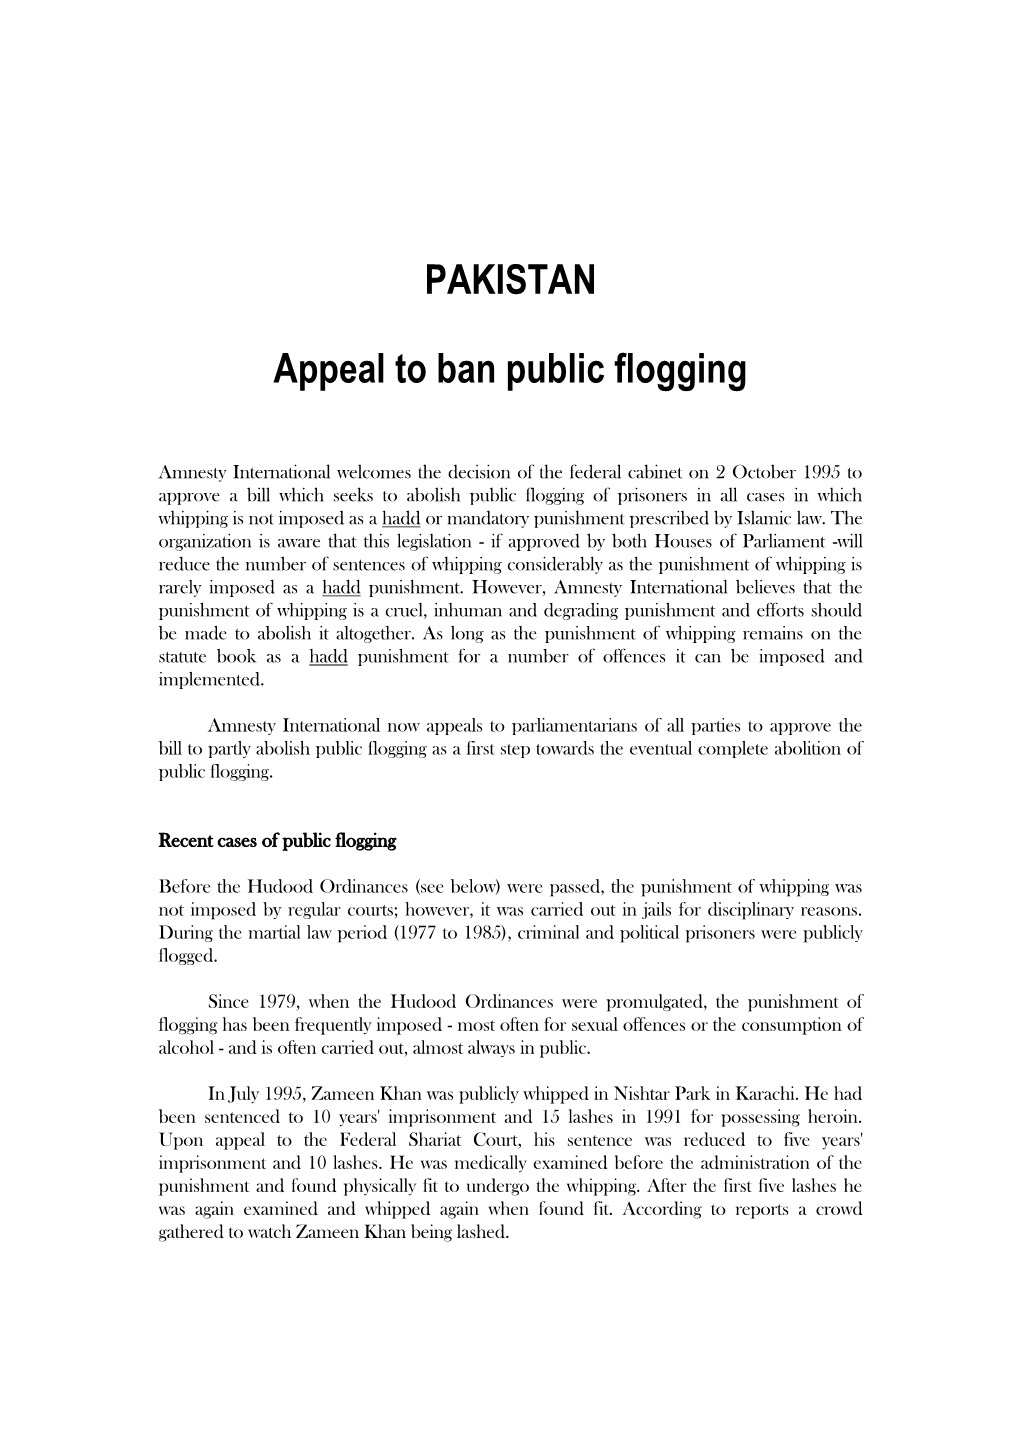 PAKISTAN Appeal to Ban Public Flogging